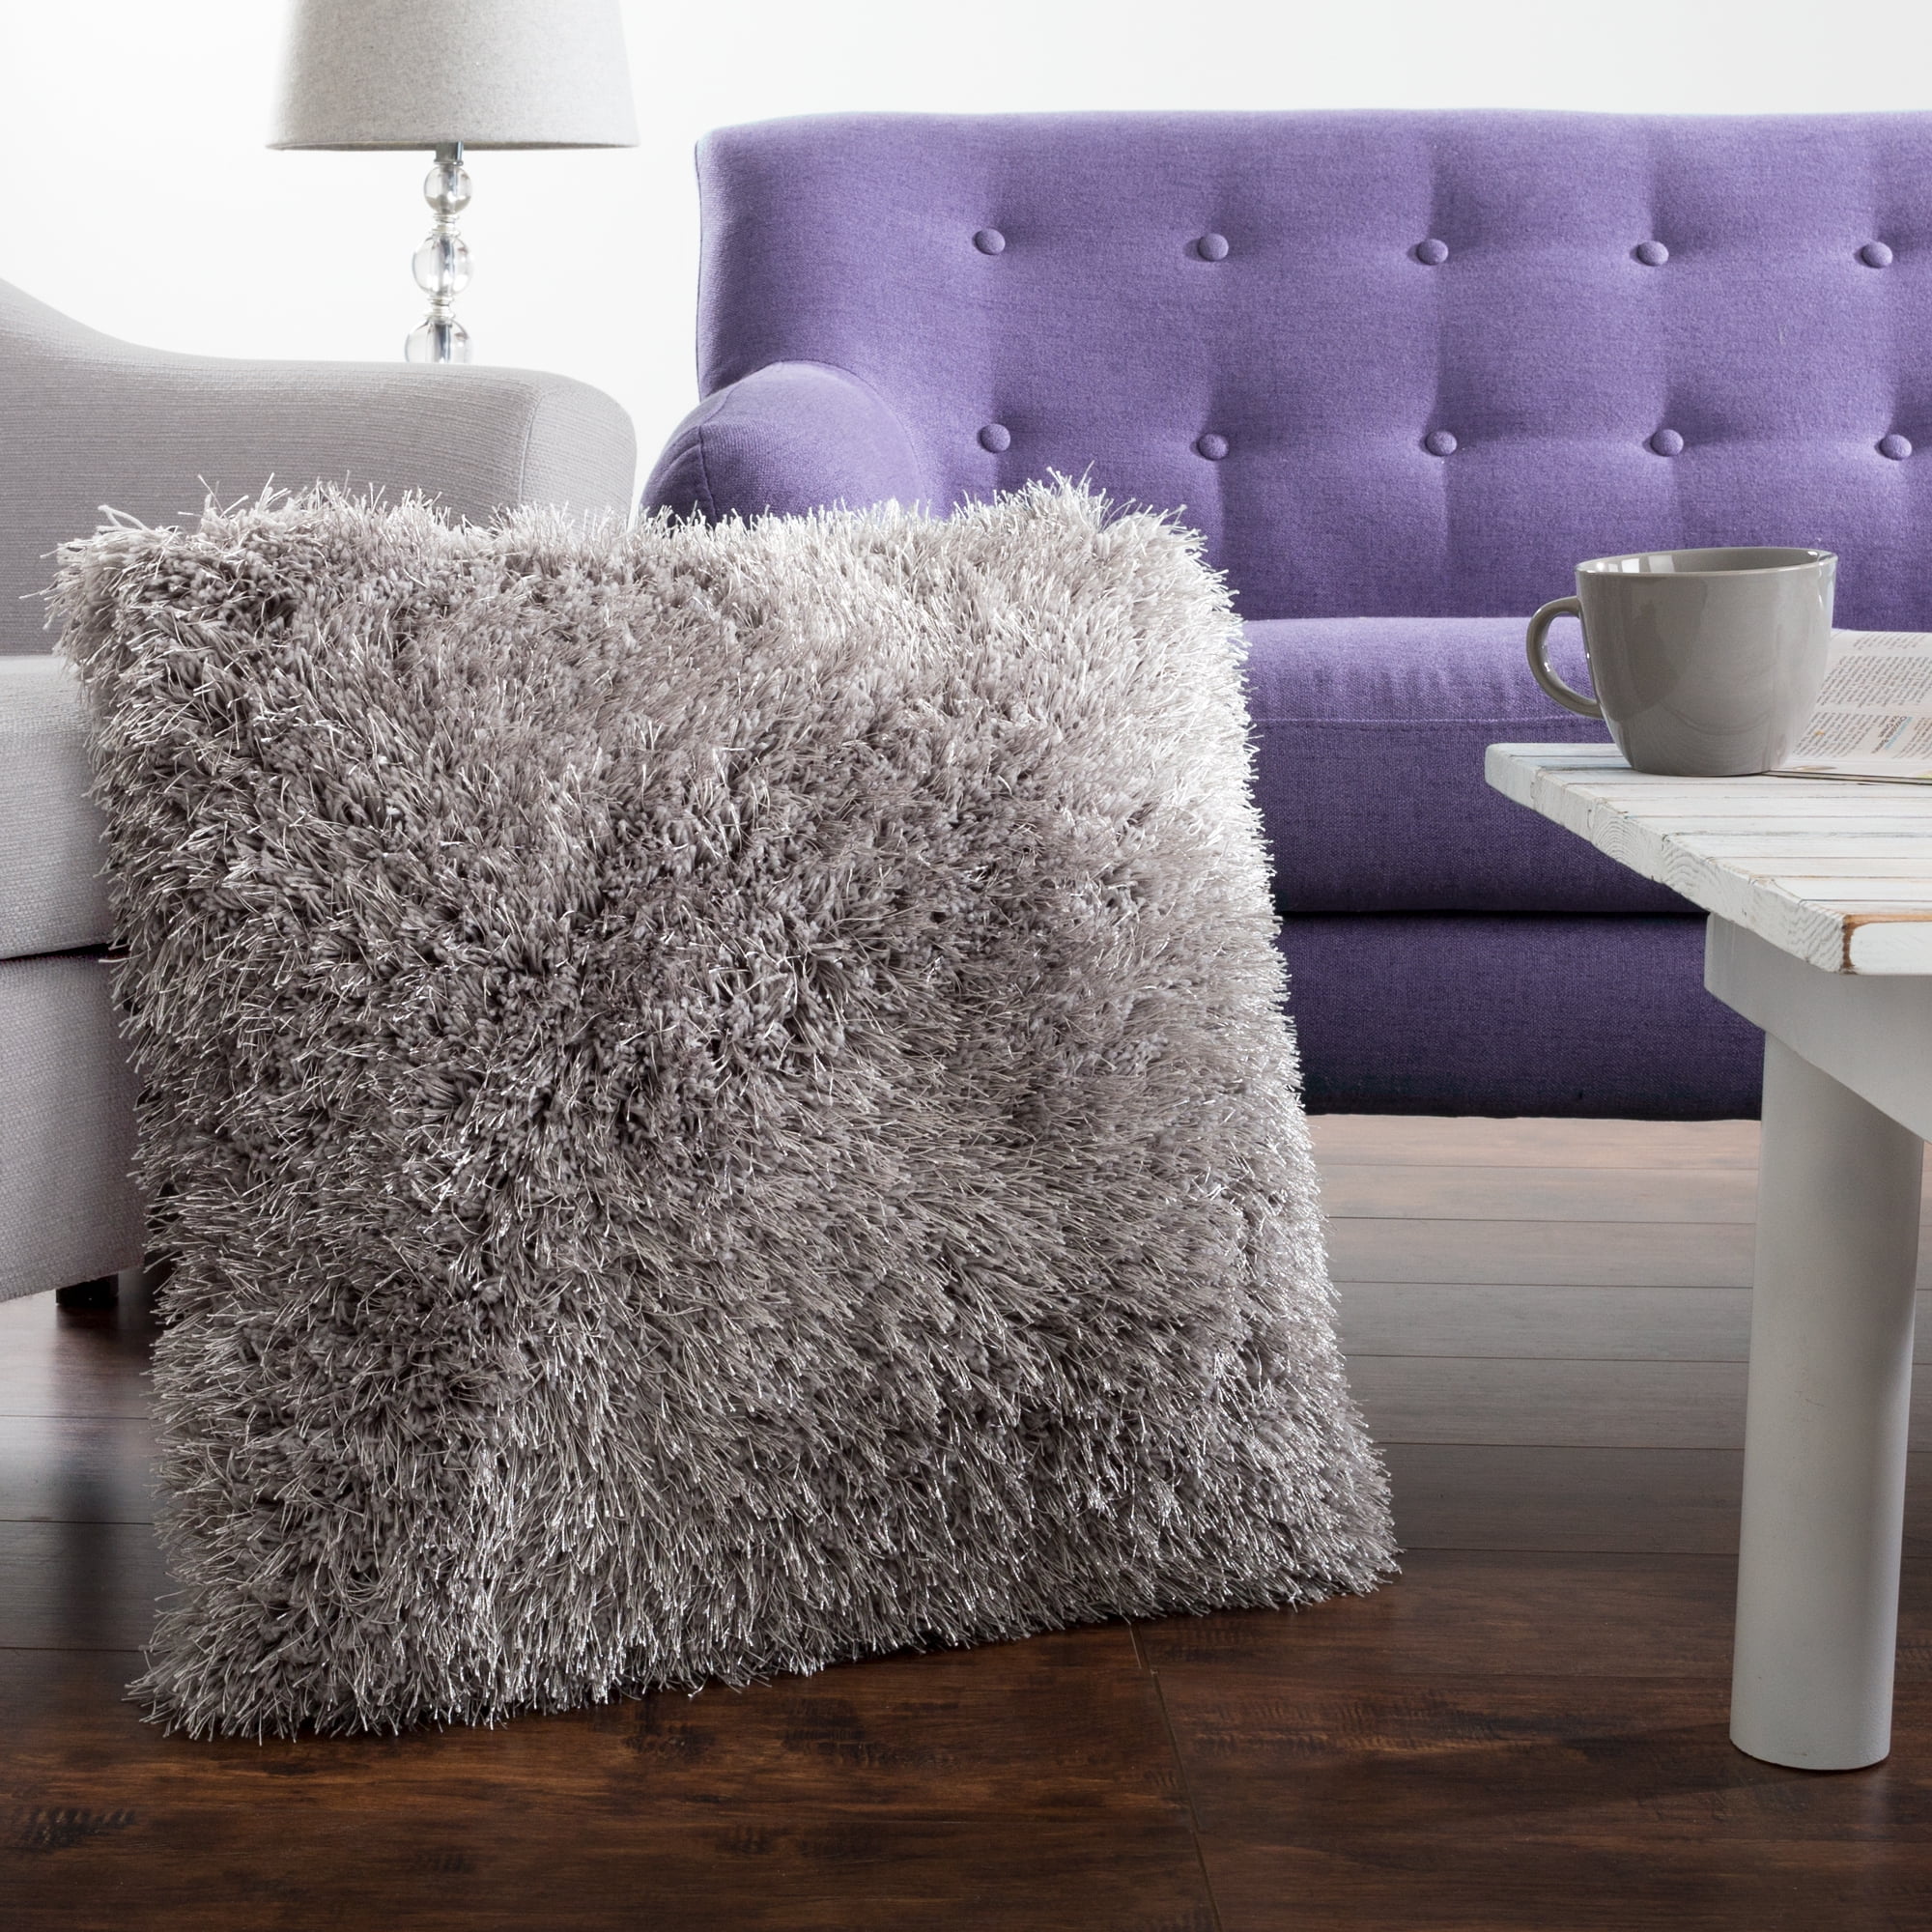 gift velvet pouf home decor floor cushion furniture coffee table floor pillow ottoman gaming table